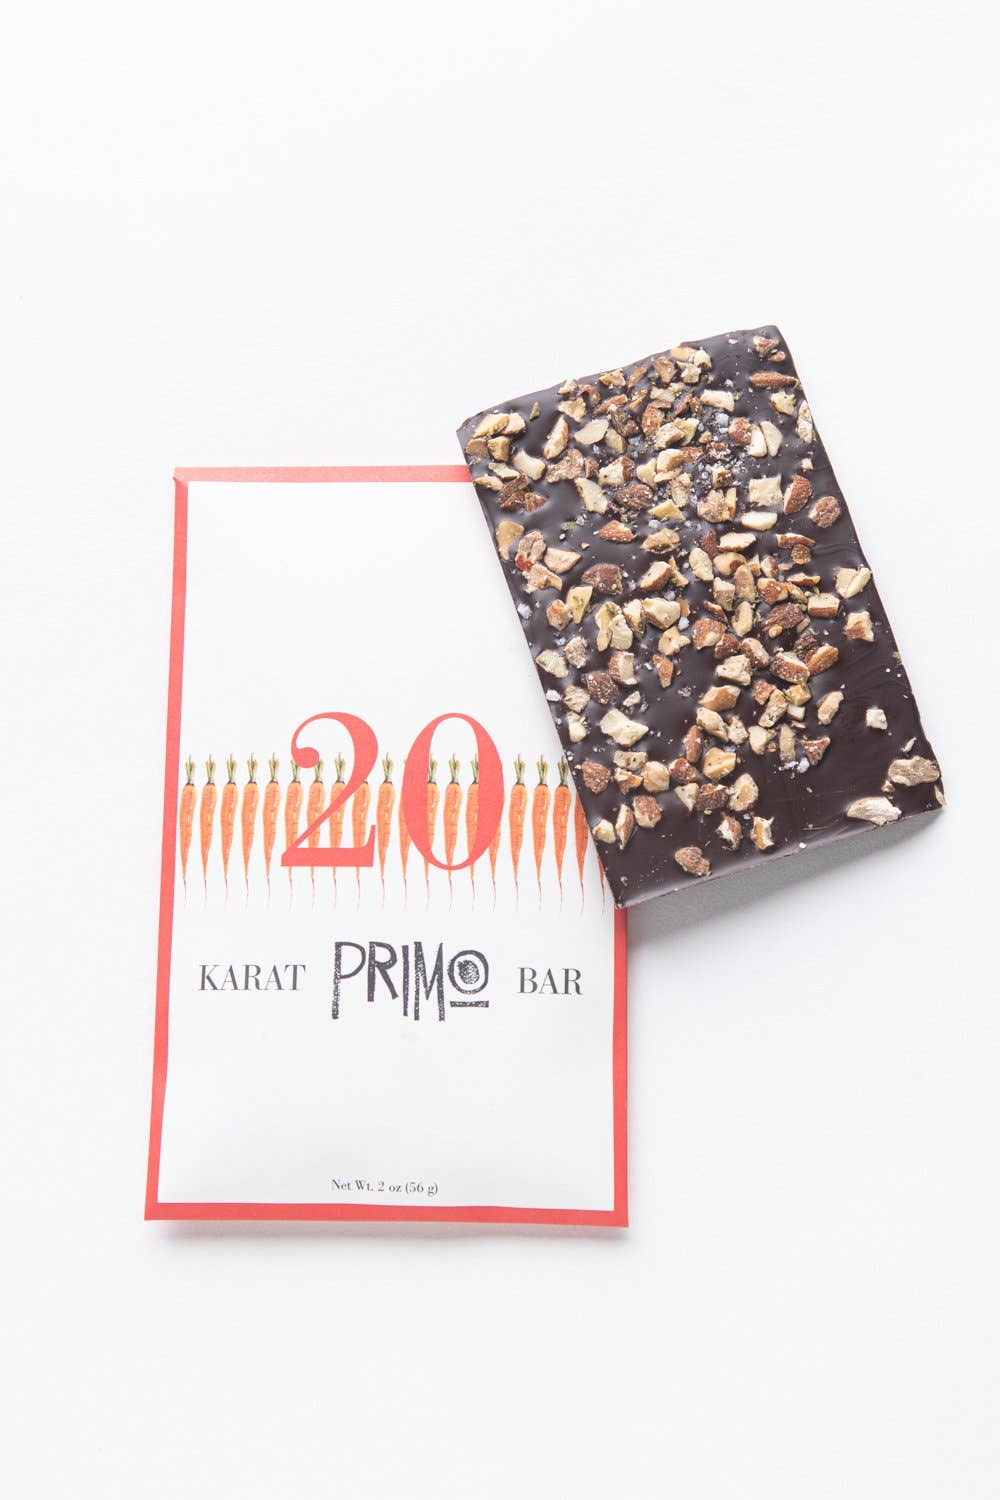 20 Karat Primo Dark Chocolate Bar